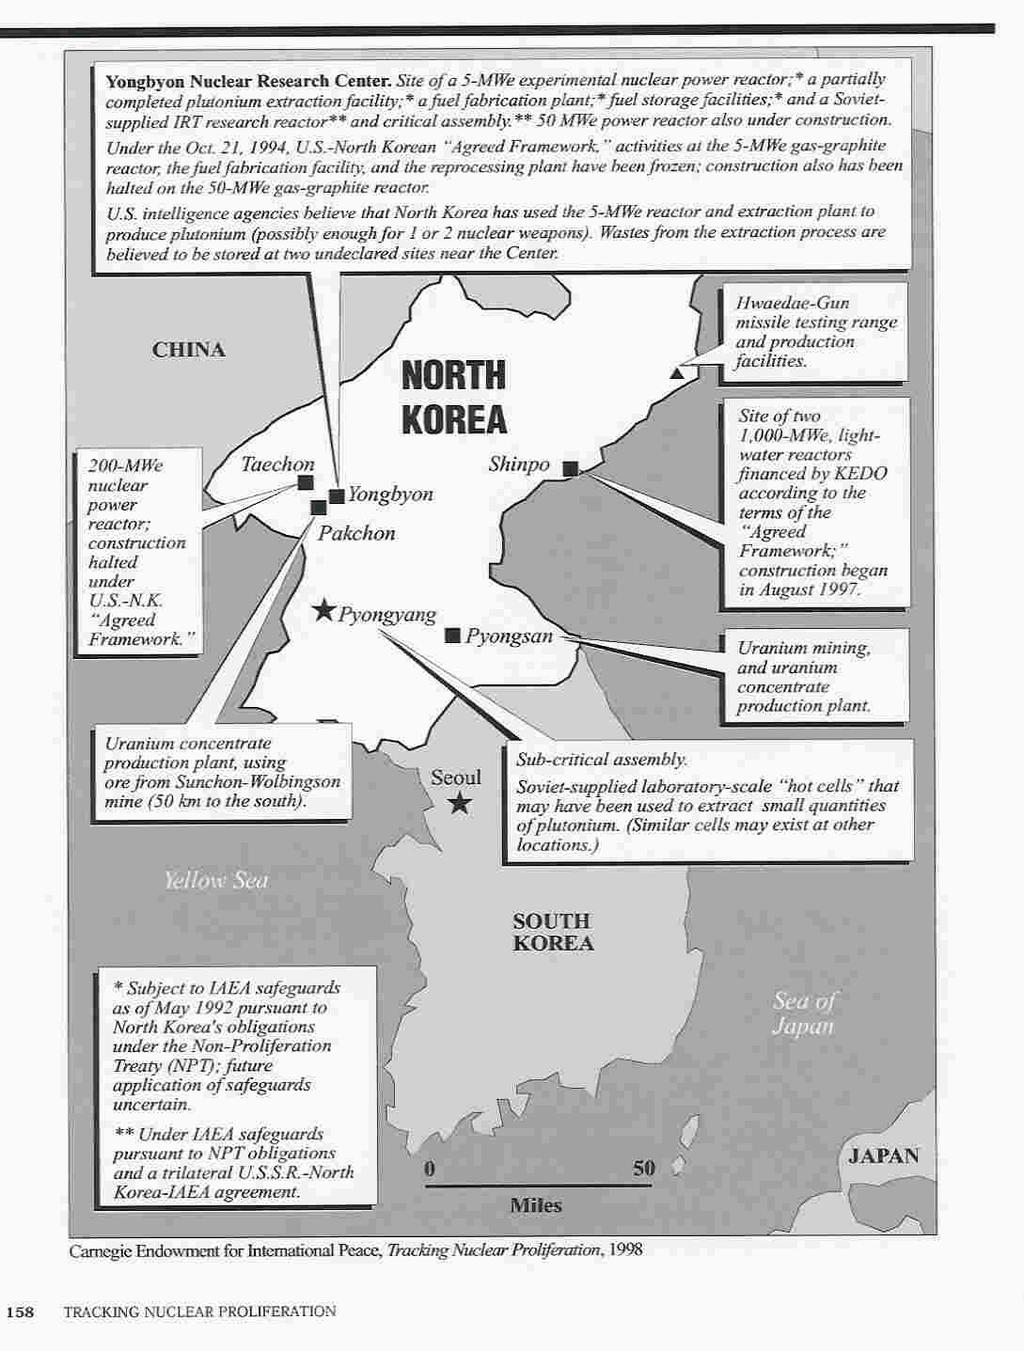 North Korean Nuclear Facilities Yongbyon: 3 reactors (IRT, 20 MW t, 200